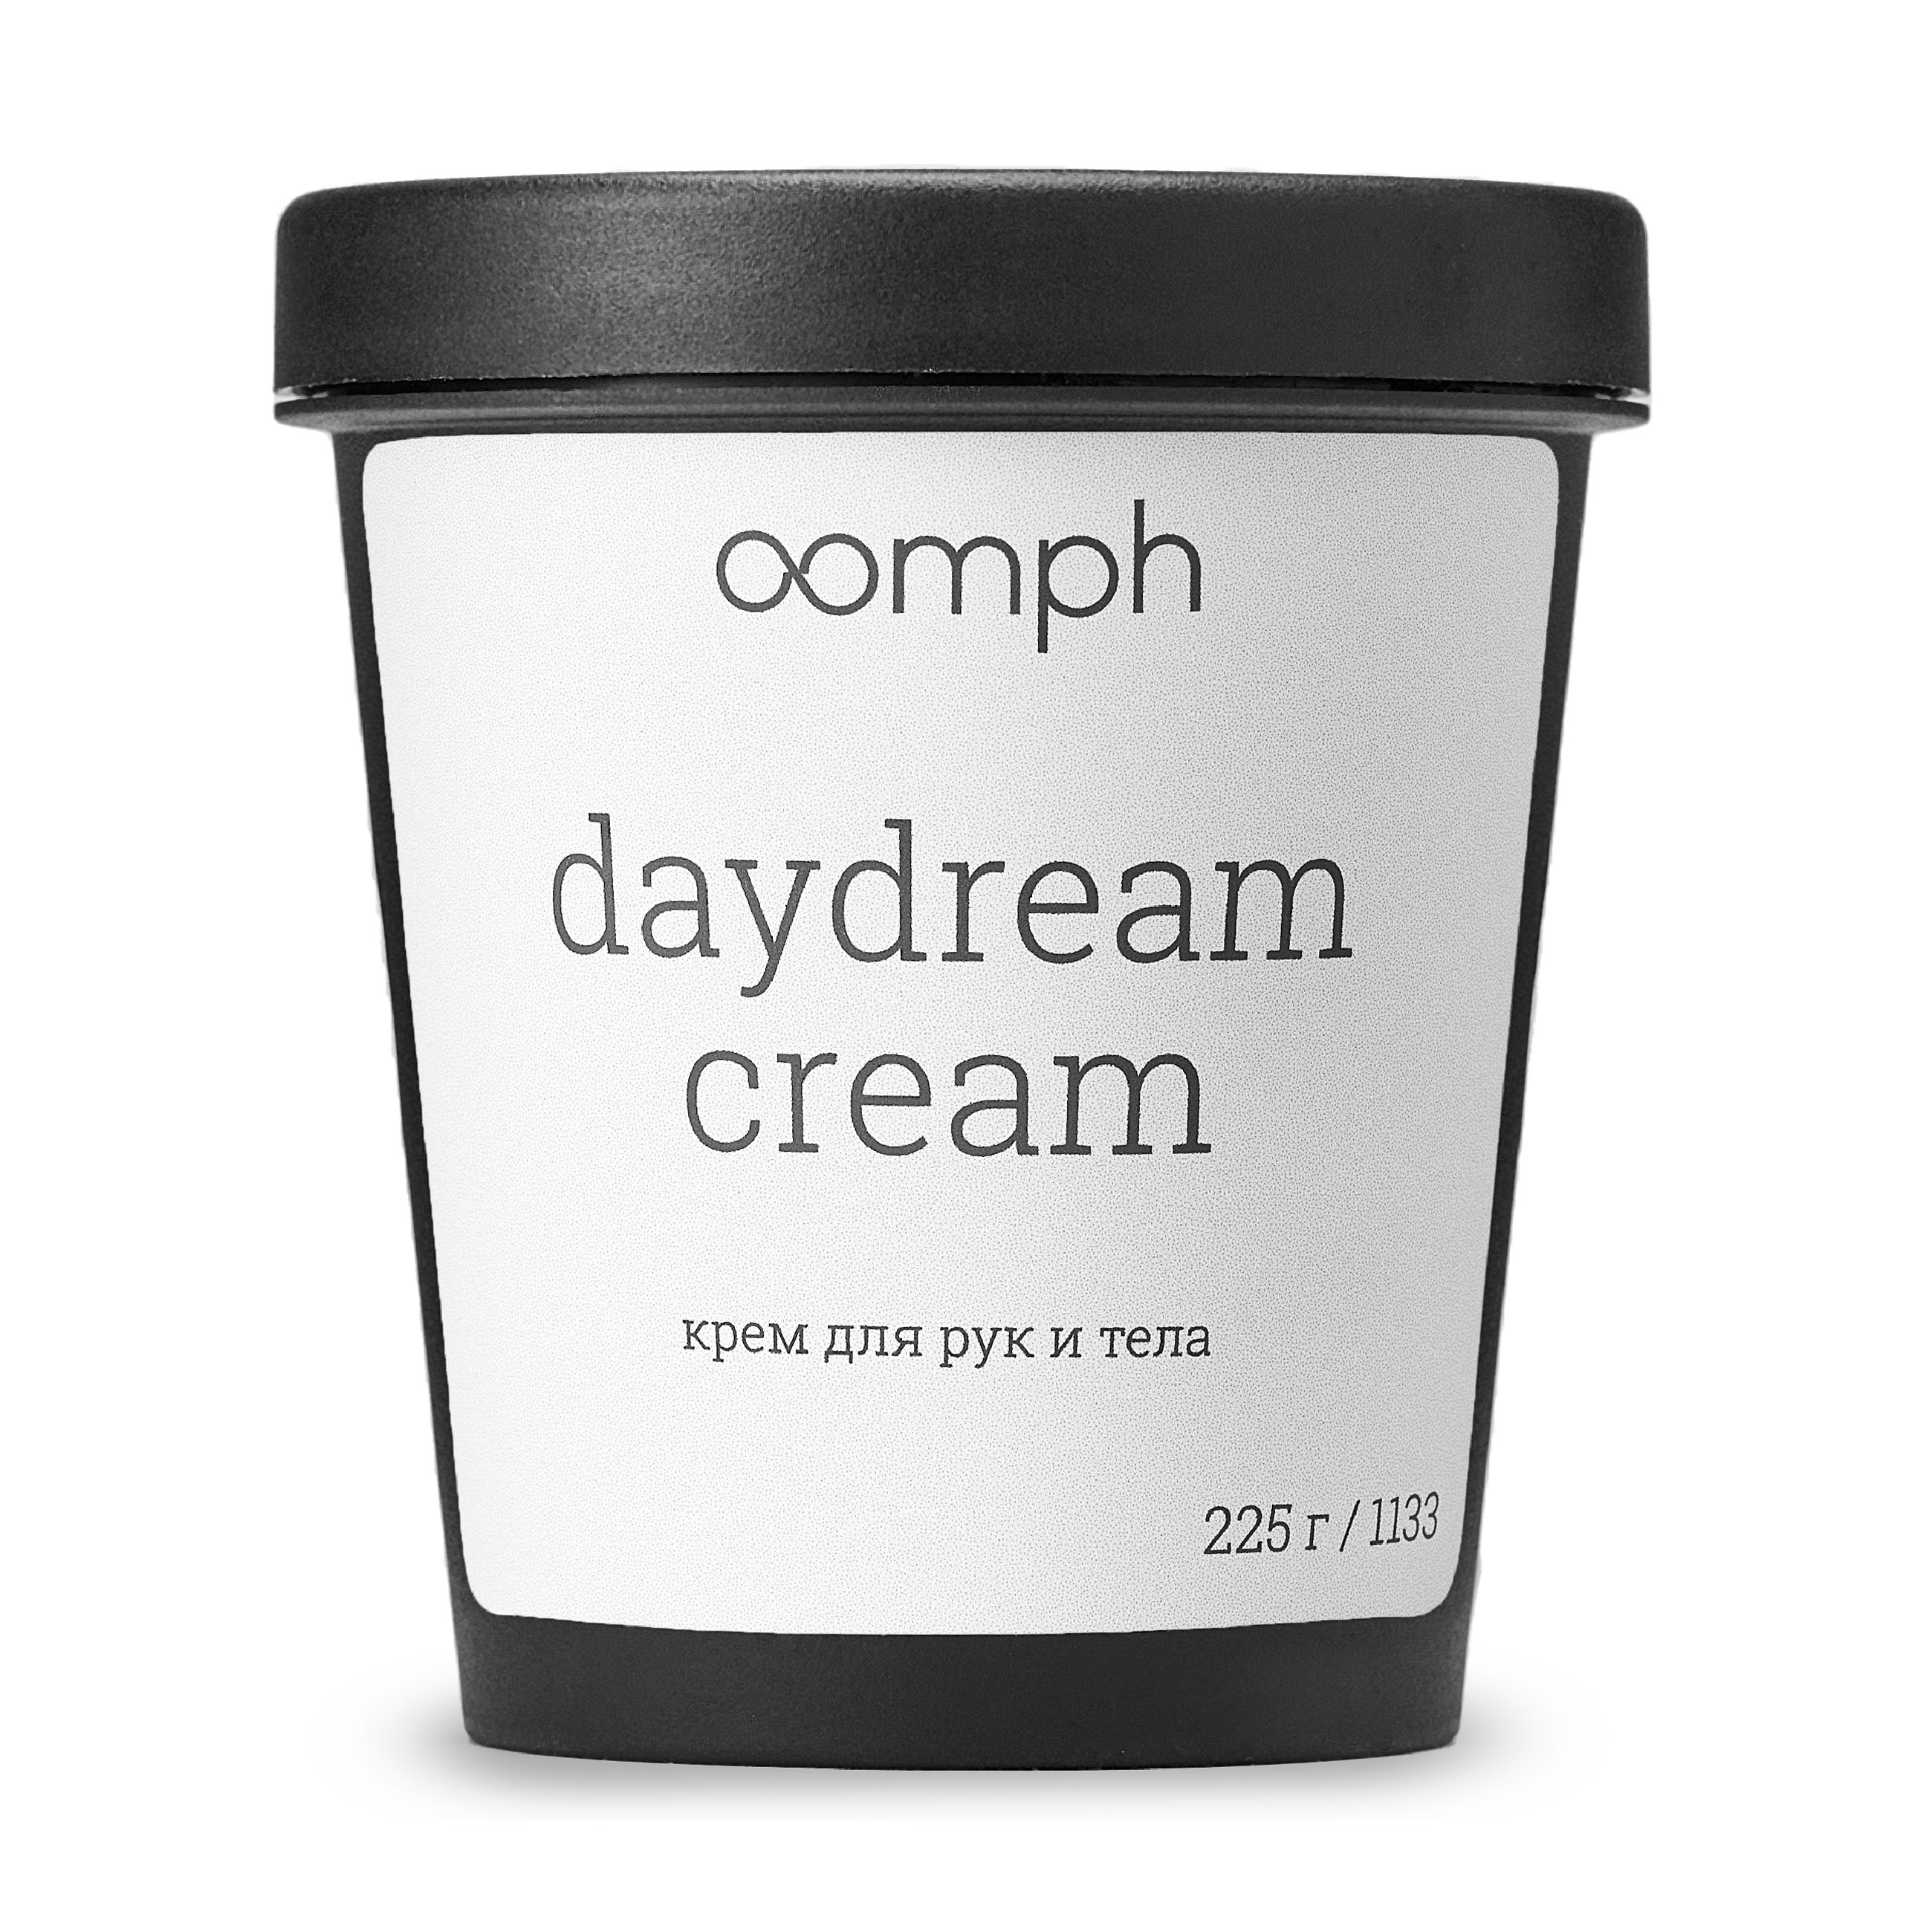 Крем для рук и тела OOMPH Daydream cream 225г